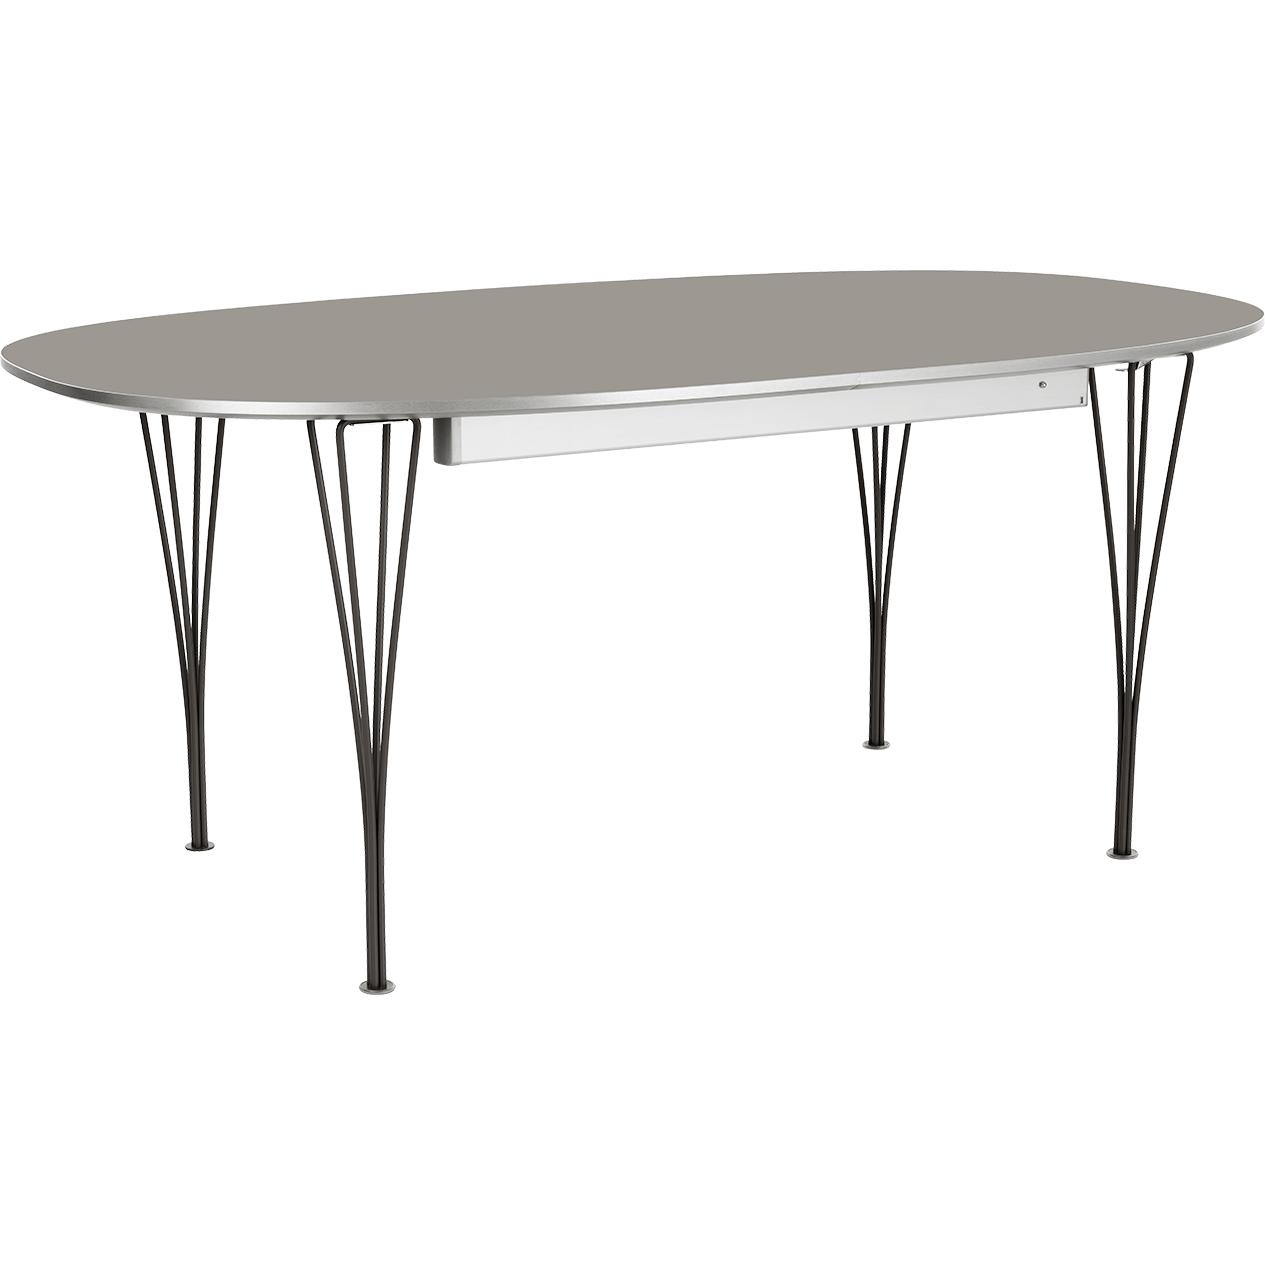 Fritz Hansen Super ellipse utdragbart bord krom 100 x170/270 cm, svart laminat